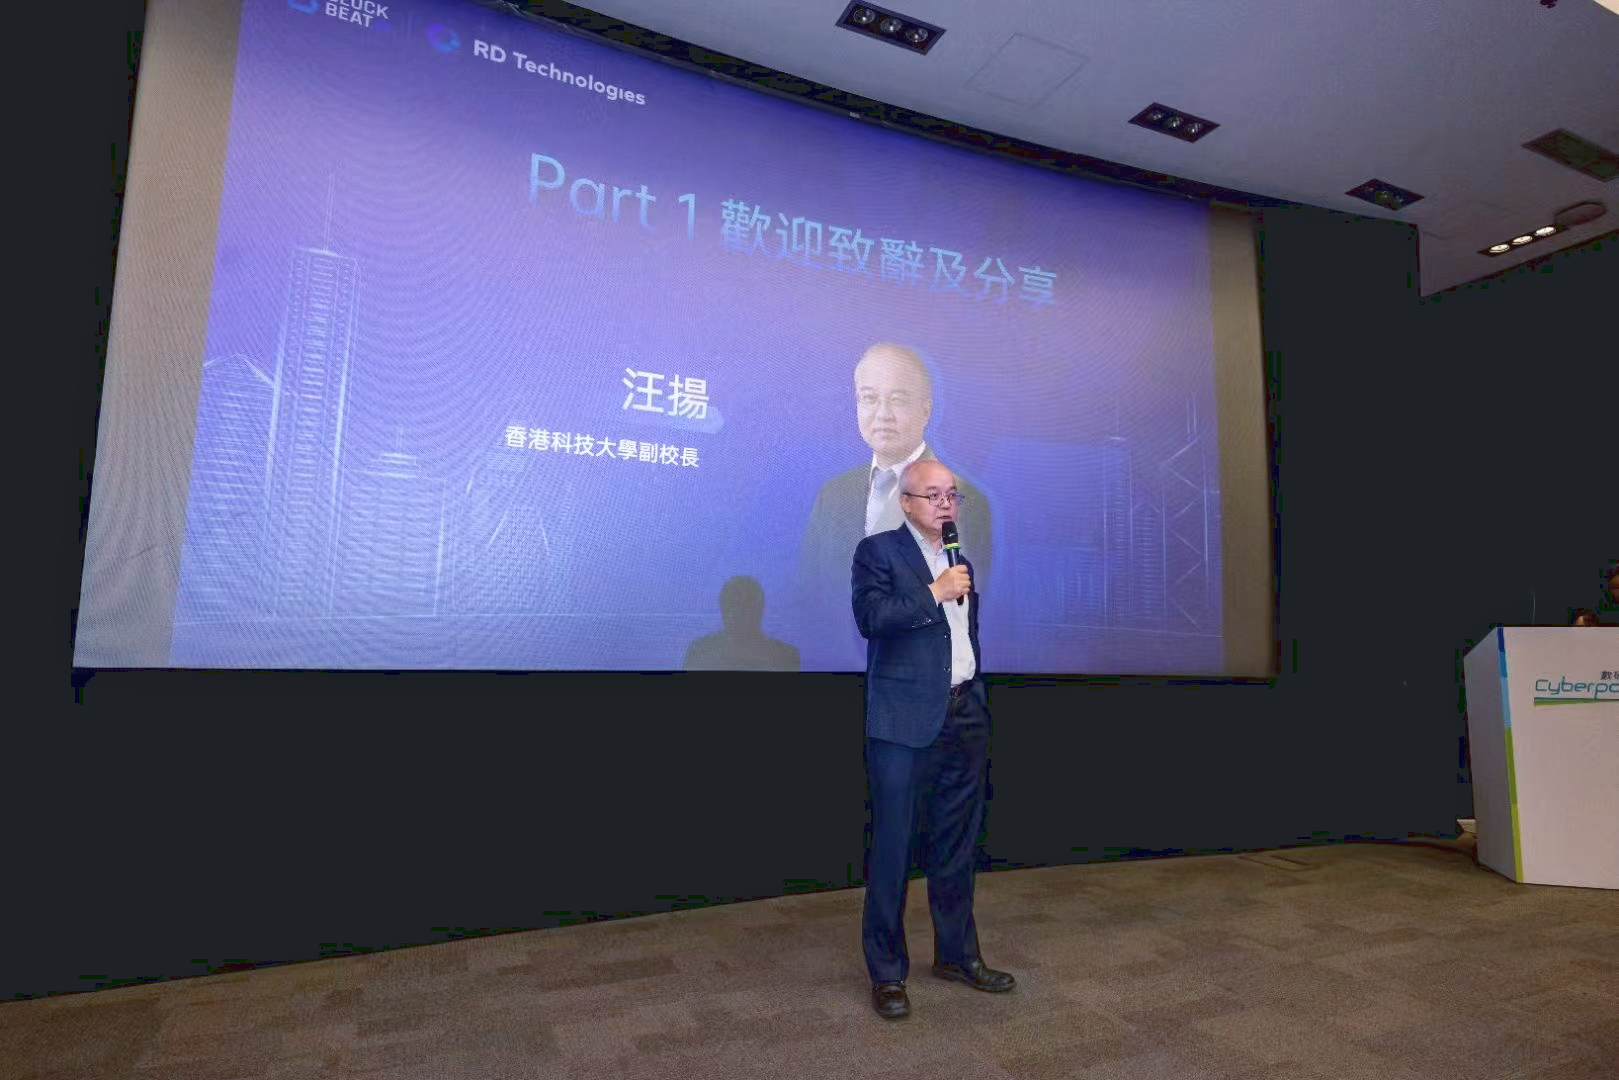 「Web3.0科技全球化論壇」燃爆數位港，探索香港邁向全球新興市場融資與創新中心